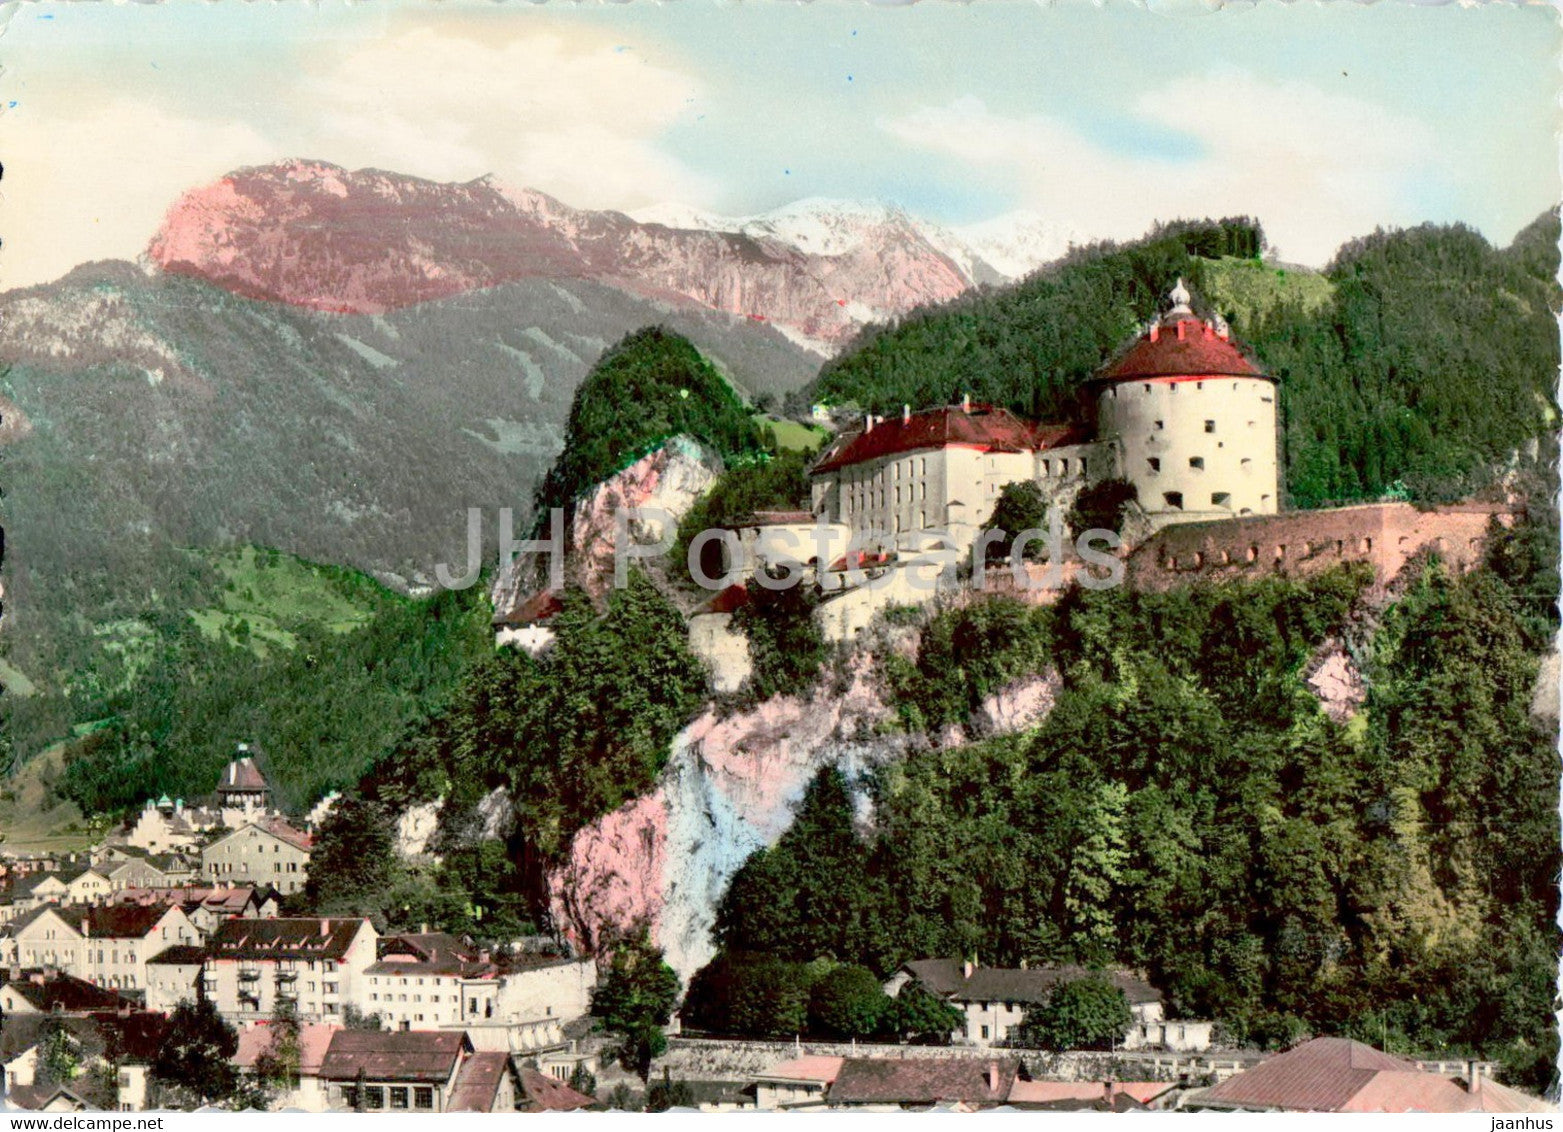 Kufstein i T - Festung Geroldseck mit Kaisergebirge - old postcard - Austria - unused - JH Postcards